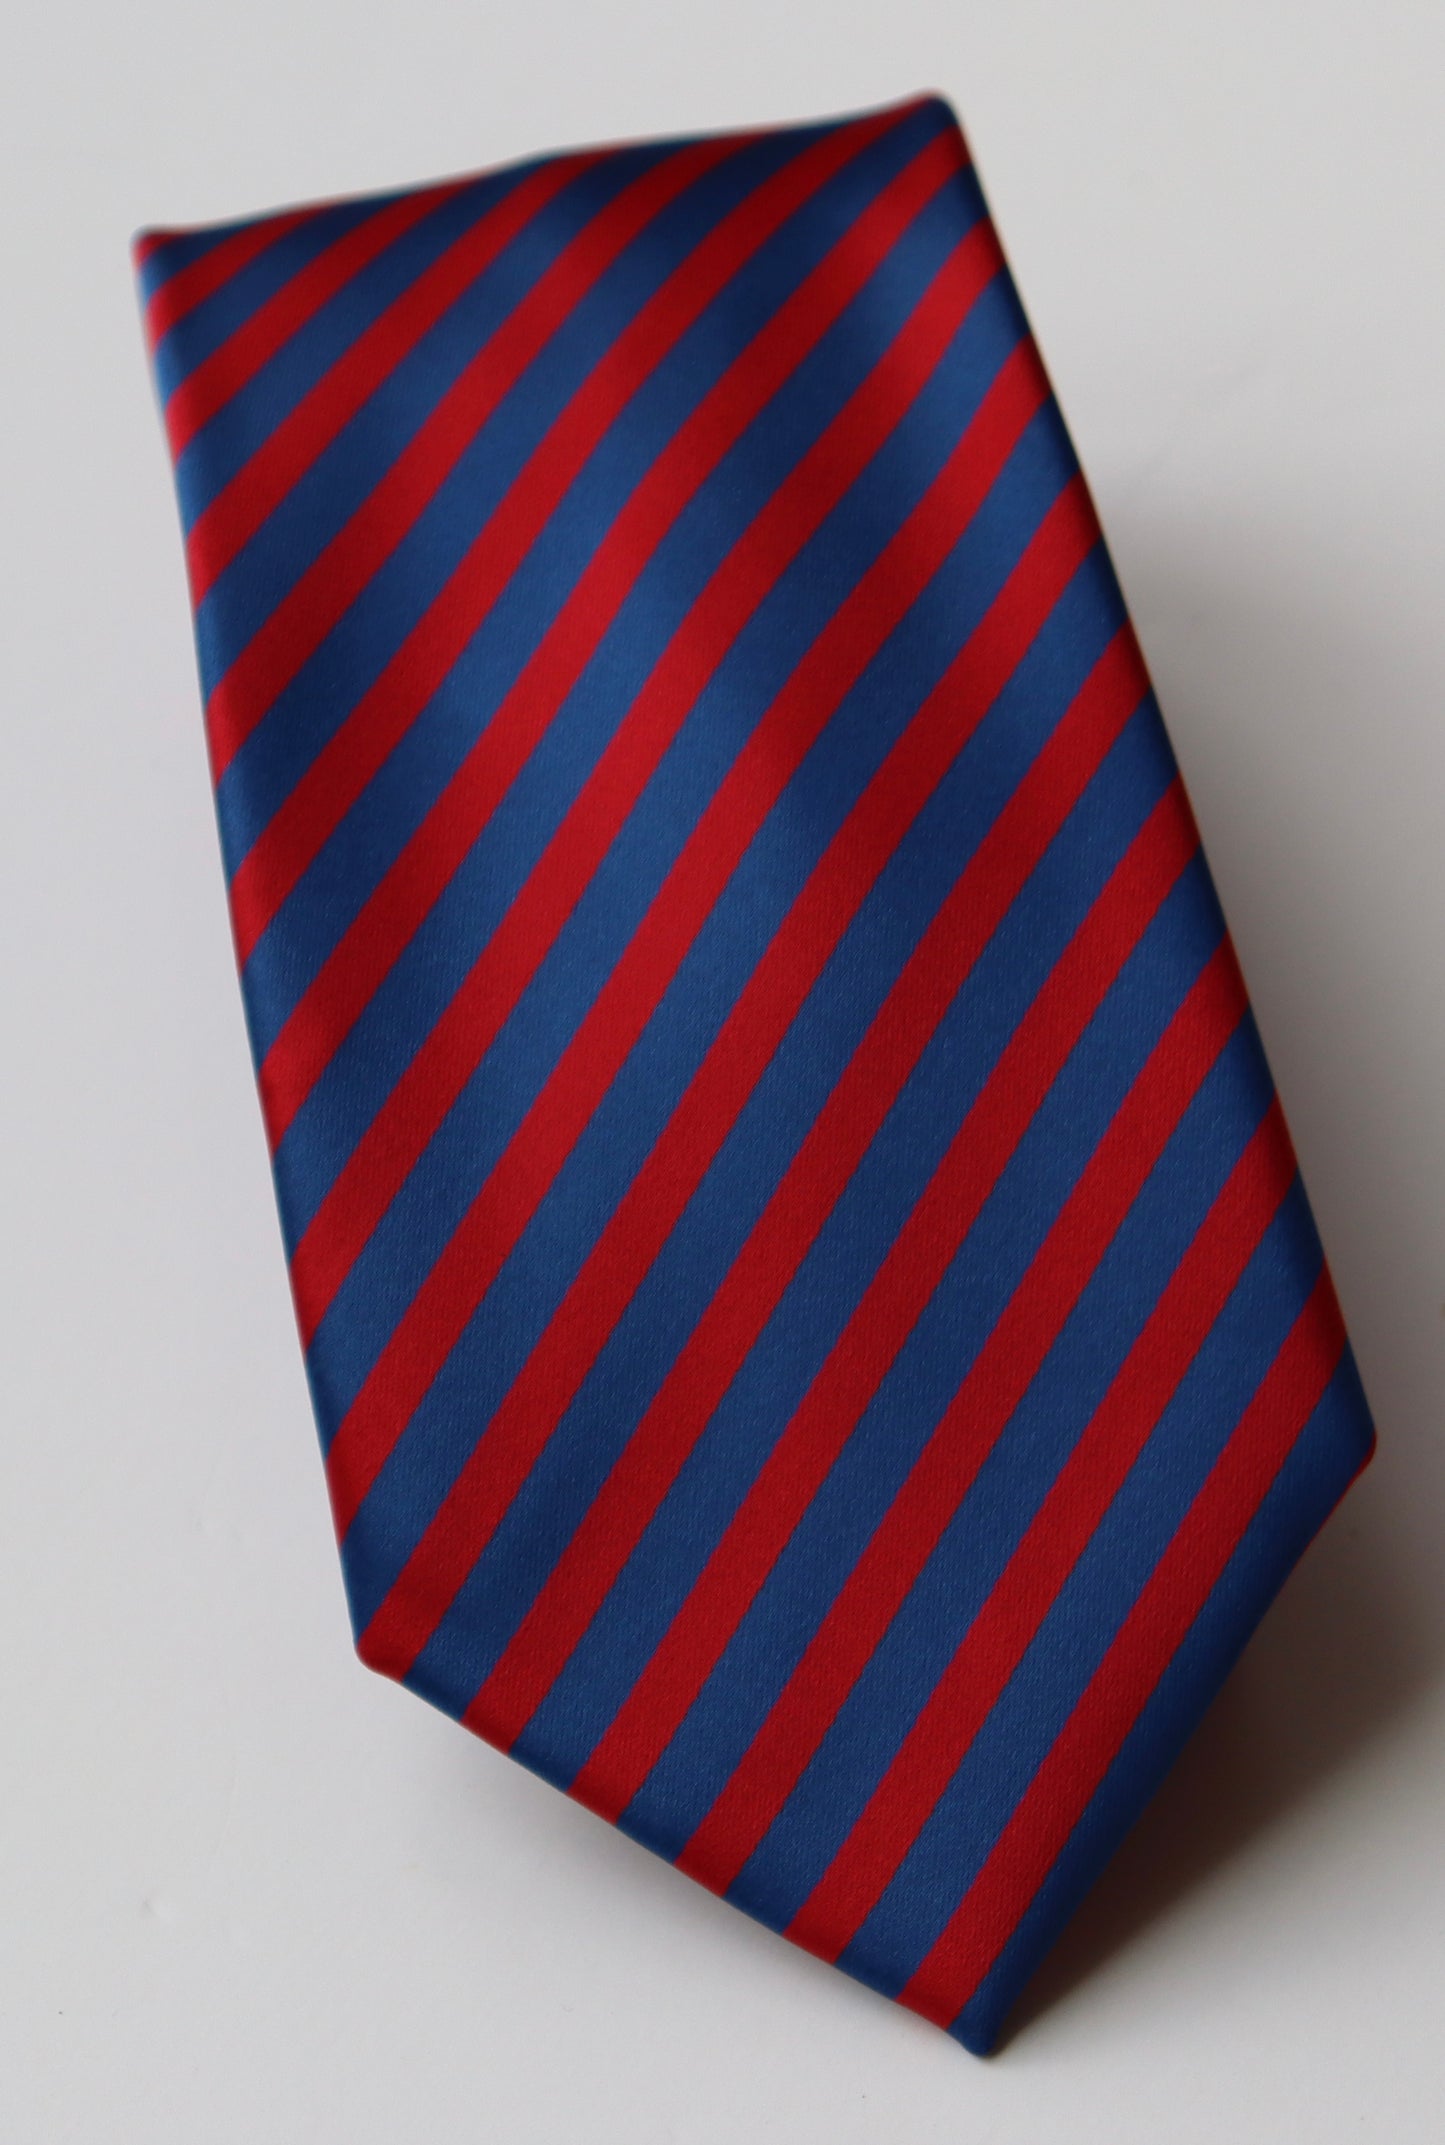 The Shirt Shop Tie - Navy/Red Stripe